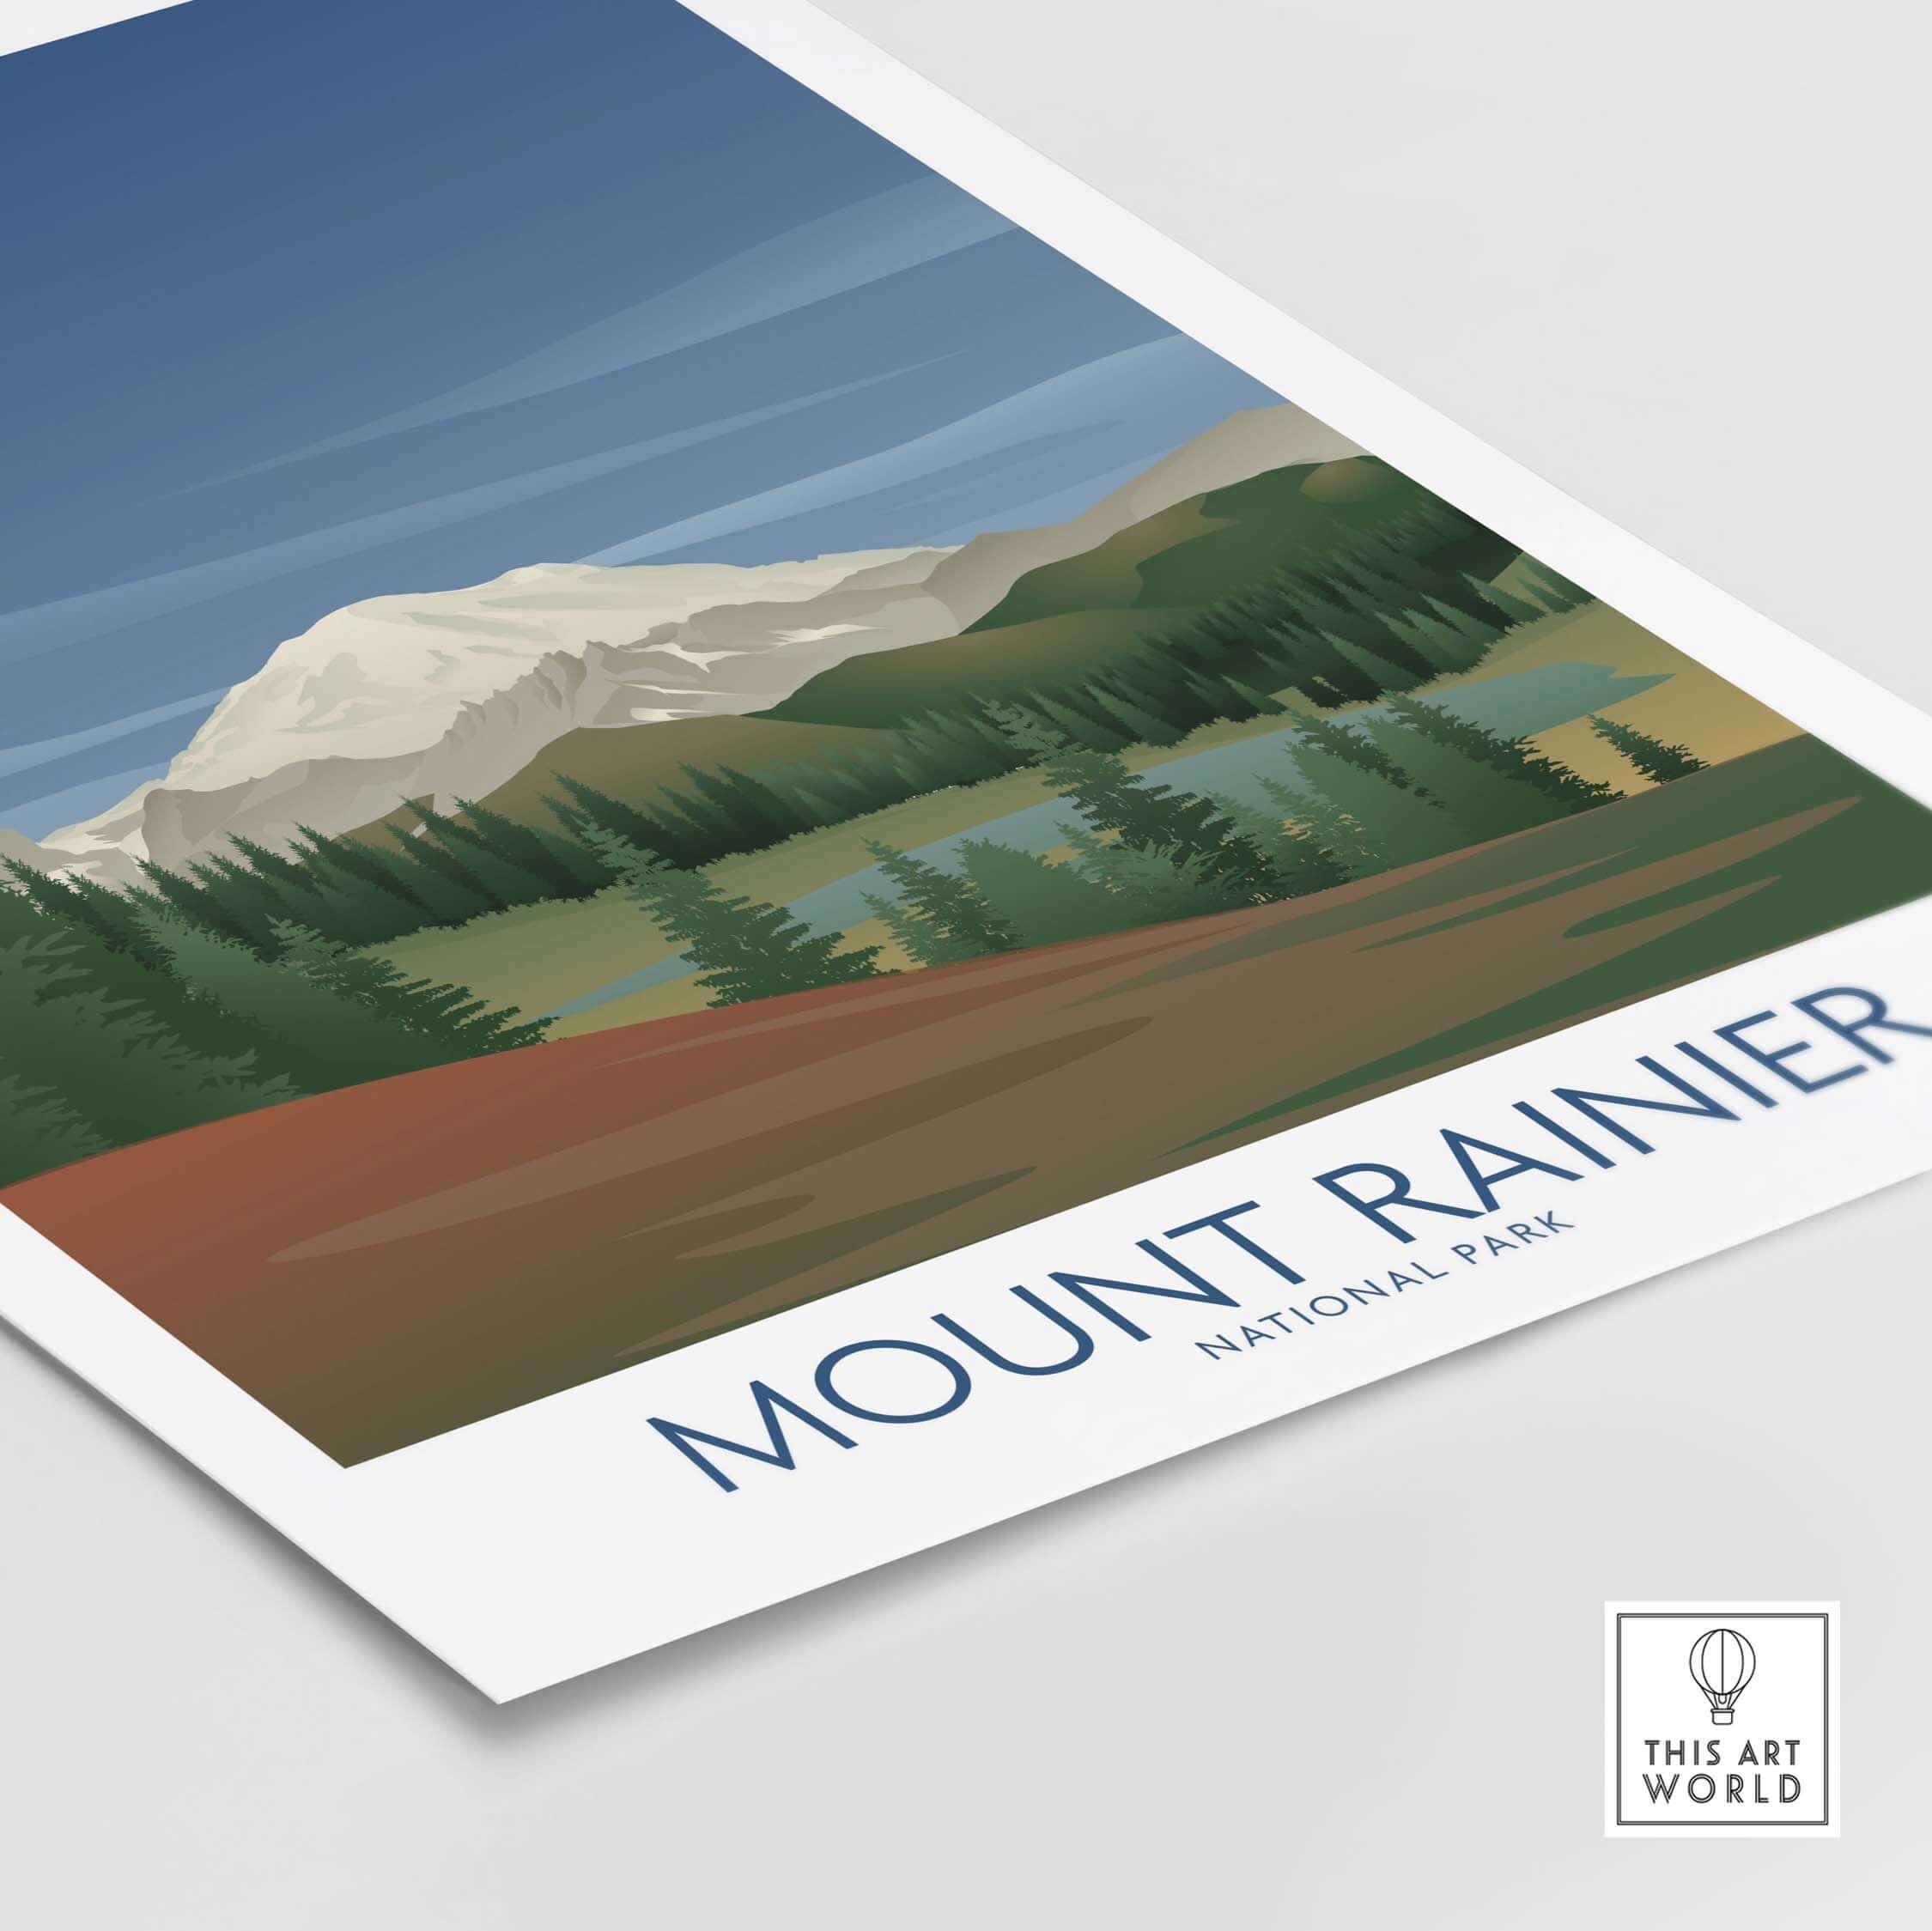 mount rainier national park art print